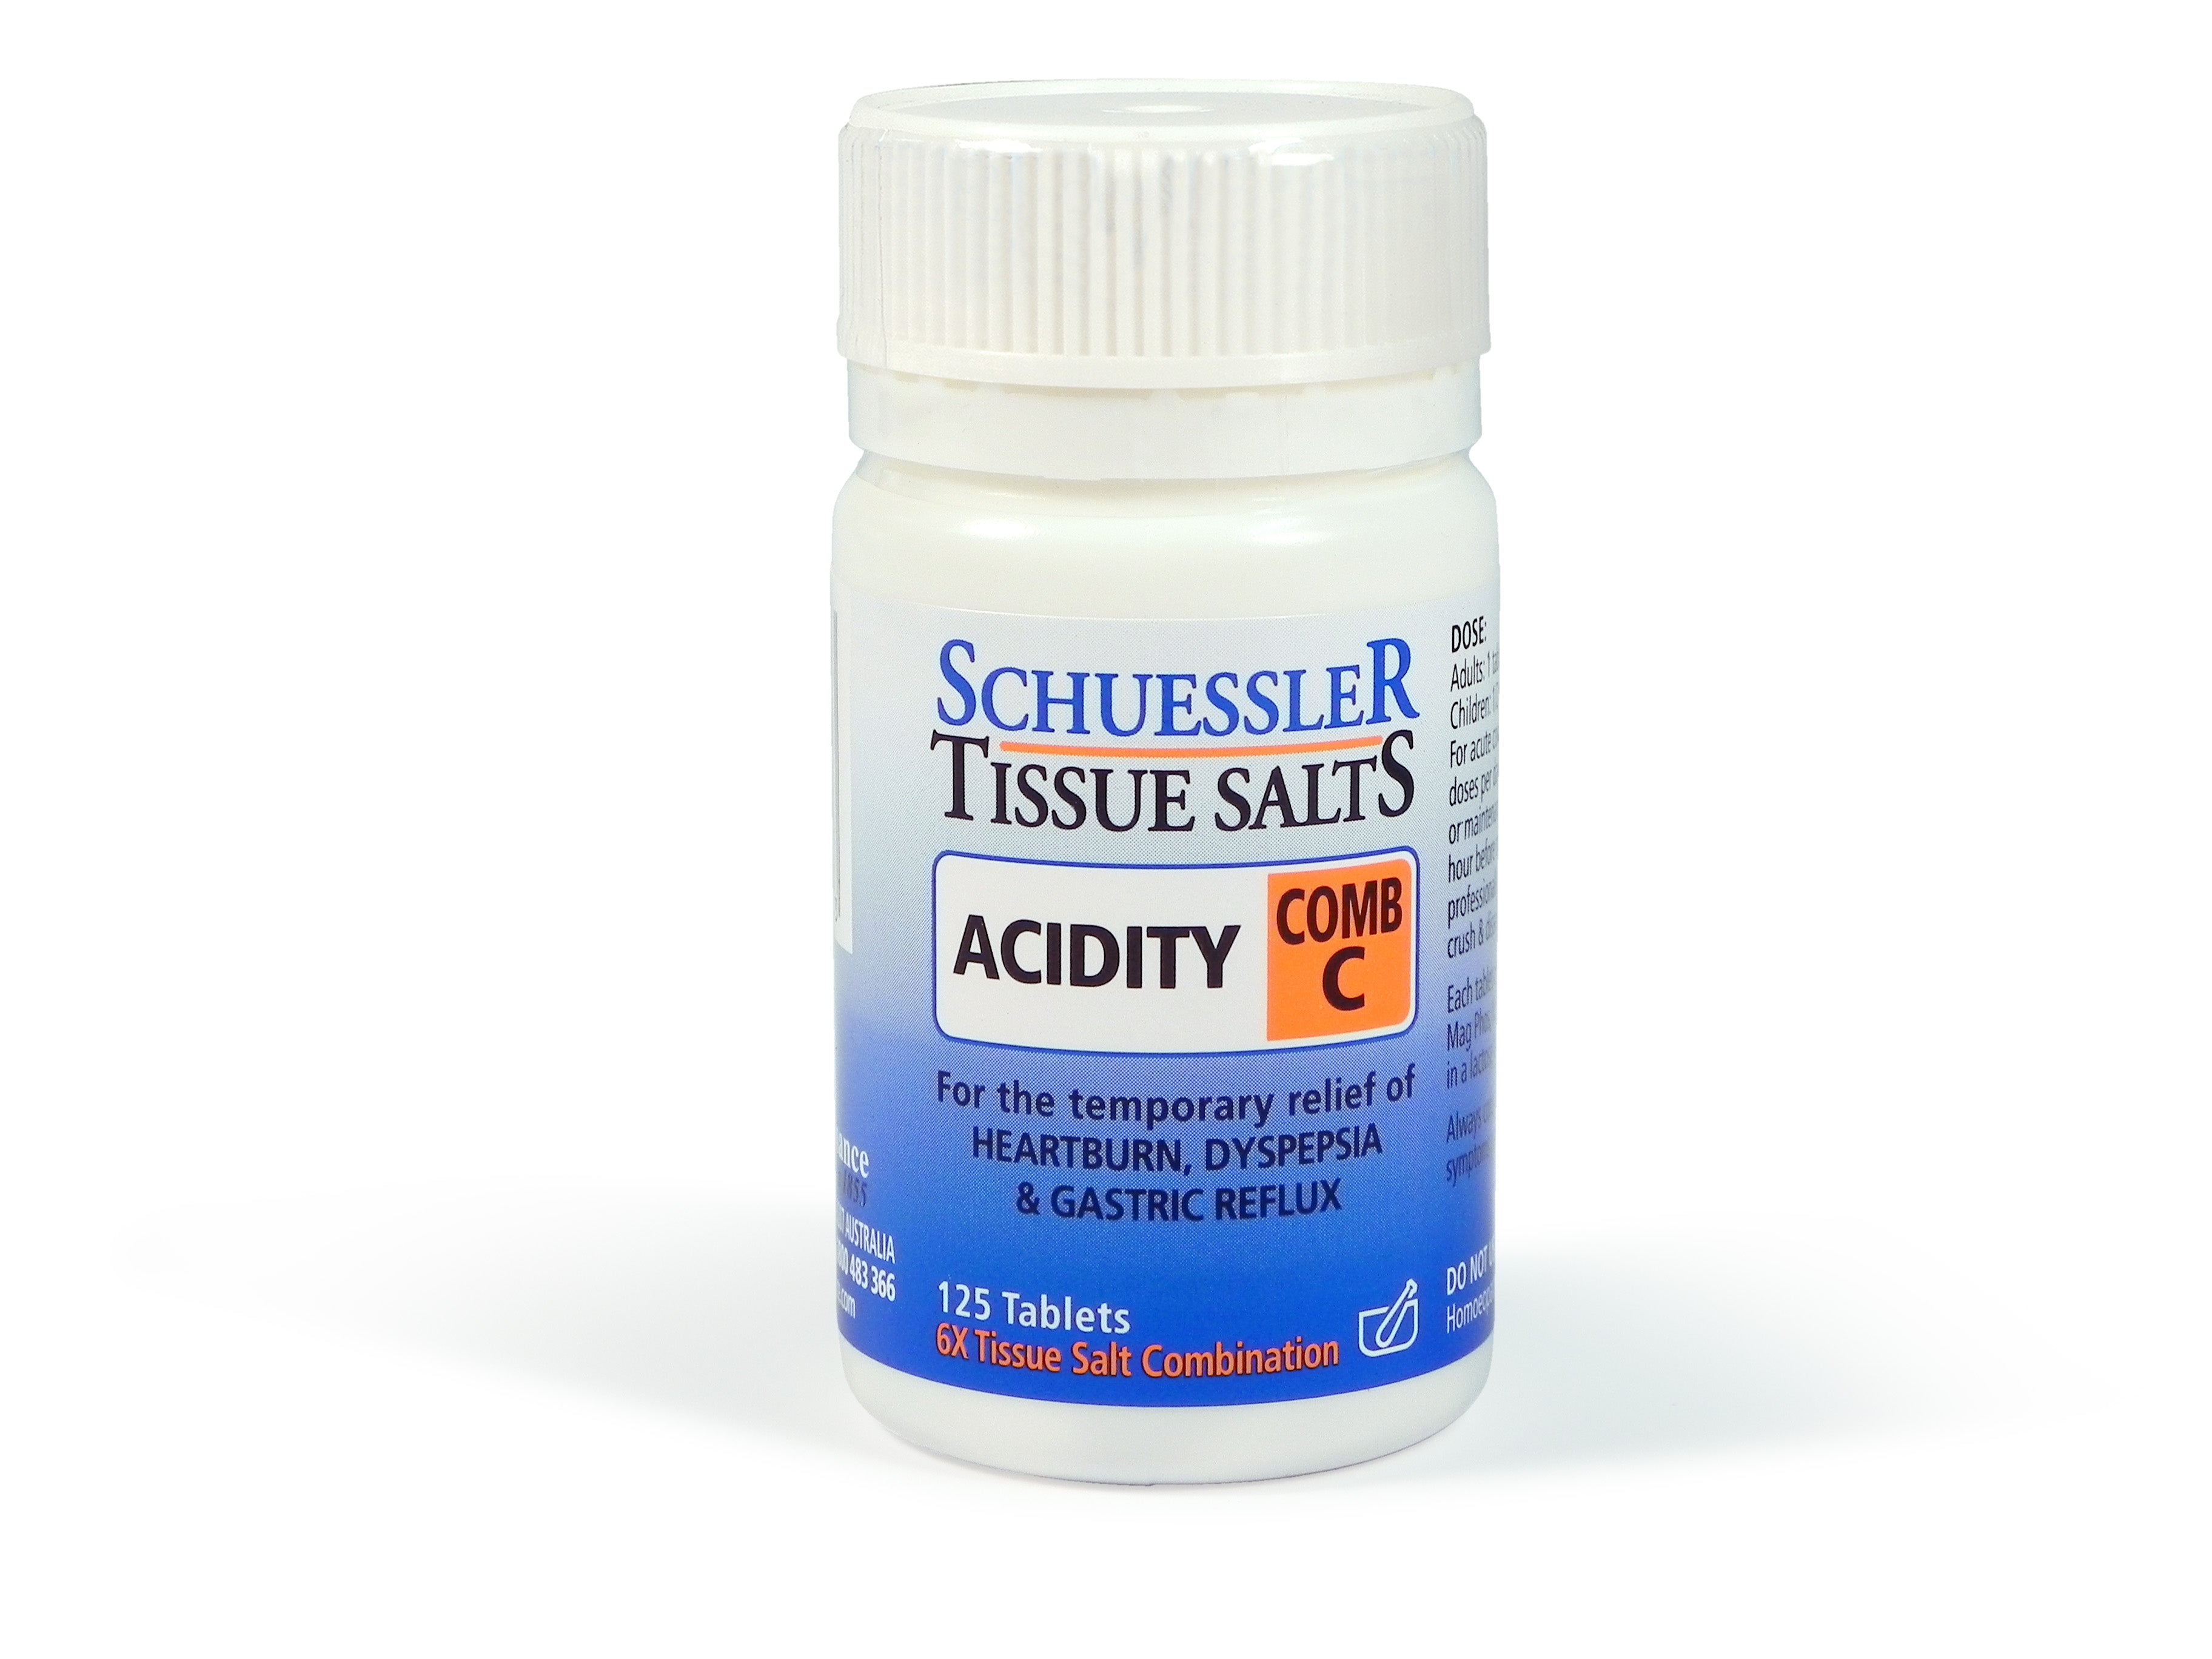 Schuessler Tissue Salts - Comb C